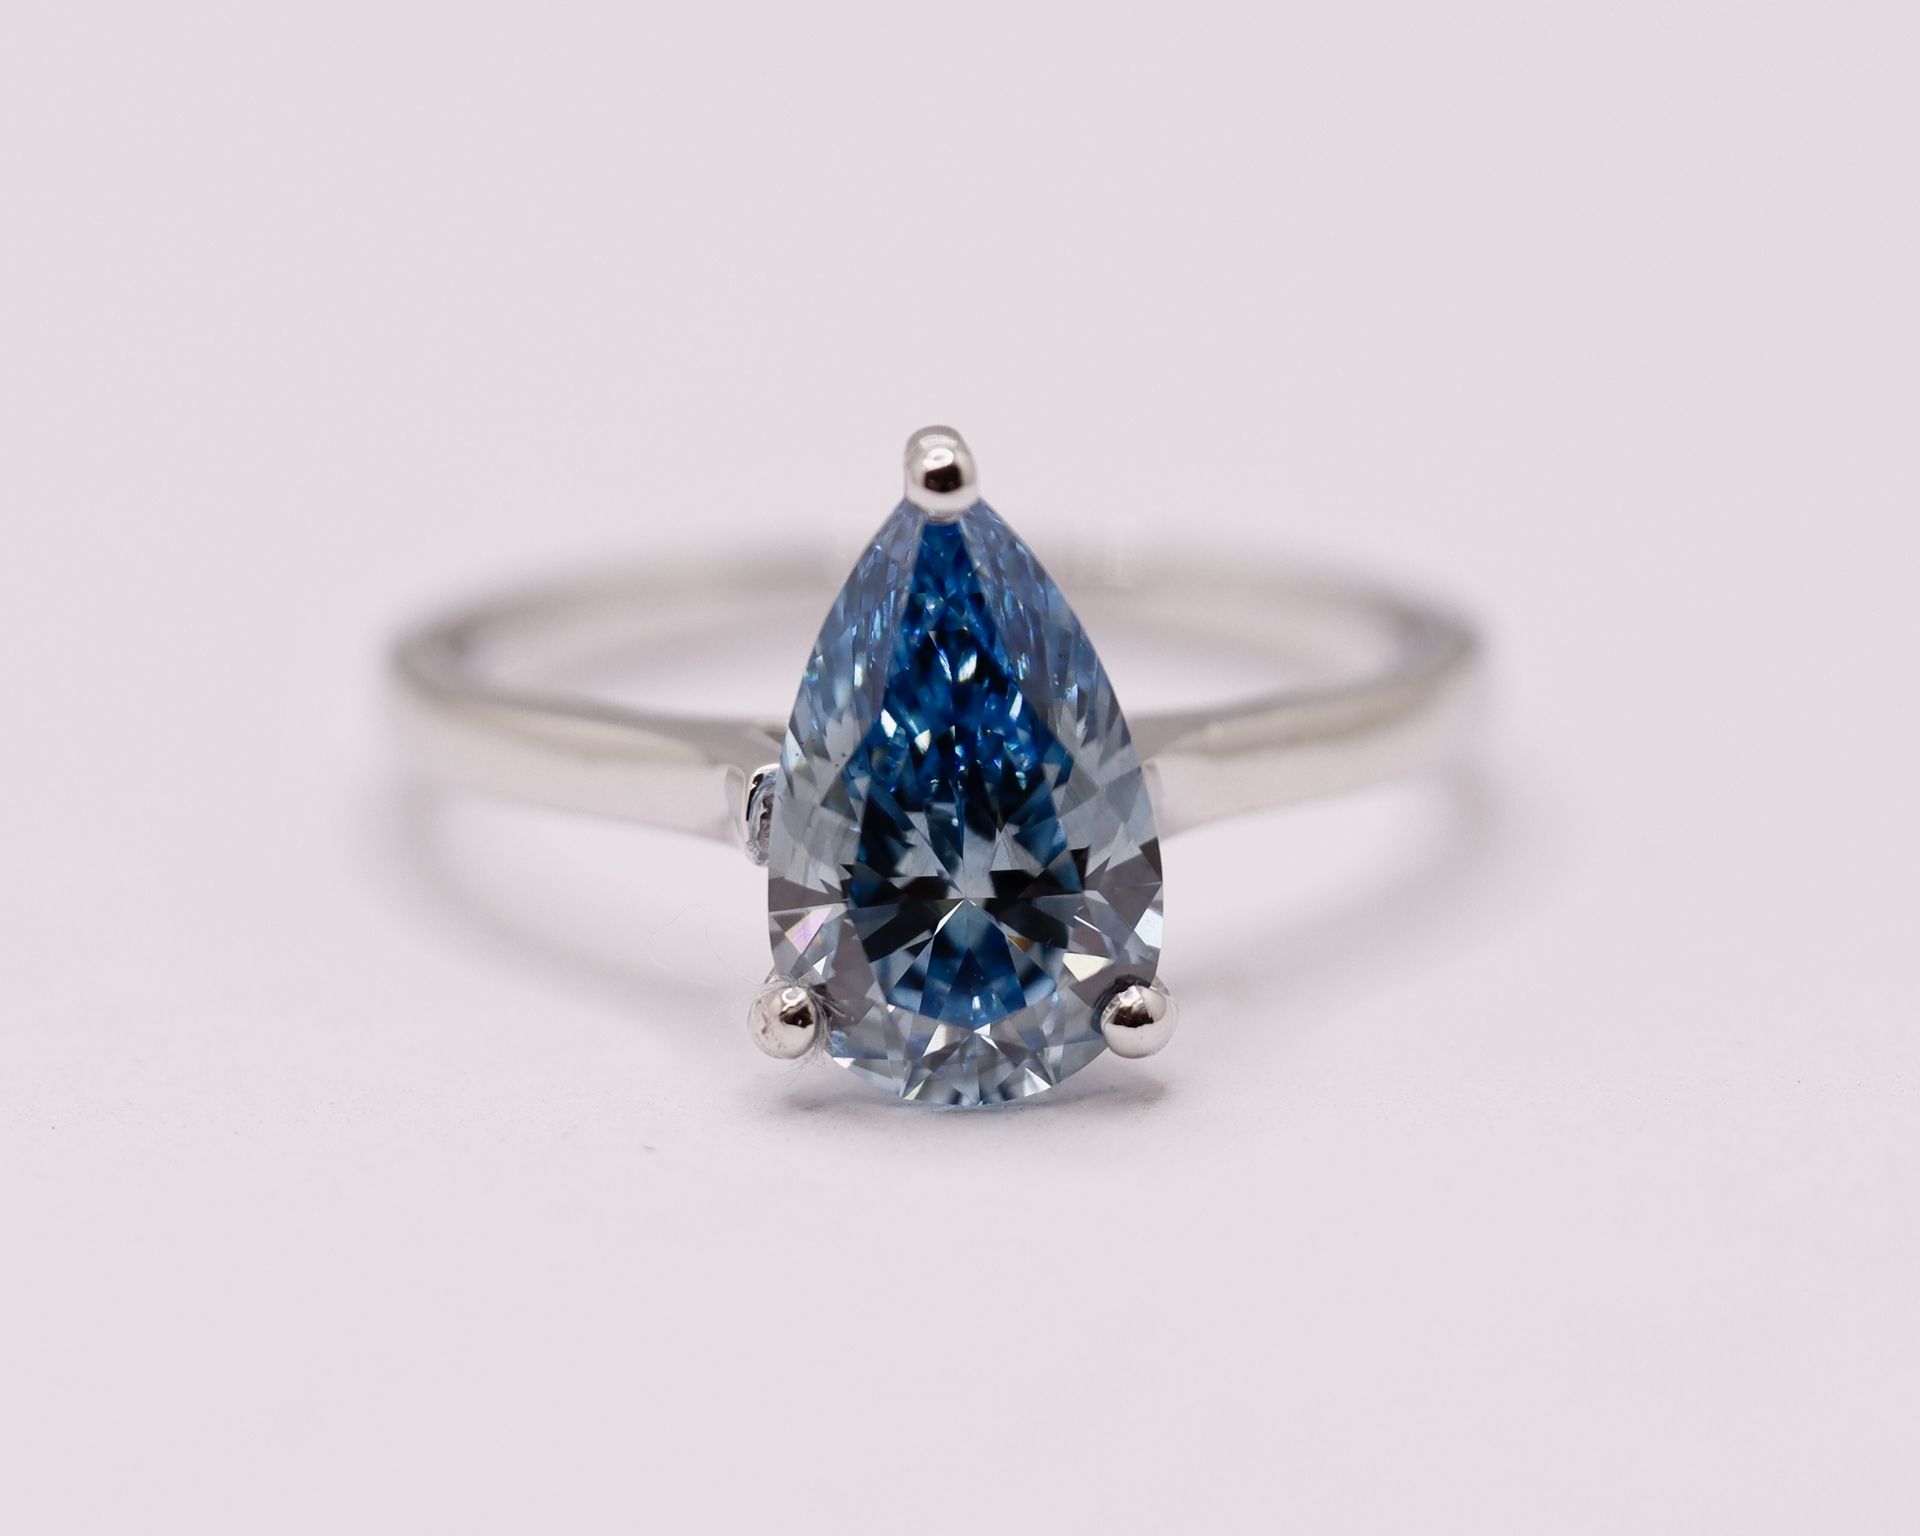 ** ON SALE ** Fancy Blue Pear Cut 1.60 Carat Diamond 18Kt White Gold Ring - VS1 - Image 6 of 6